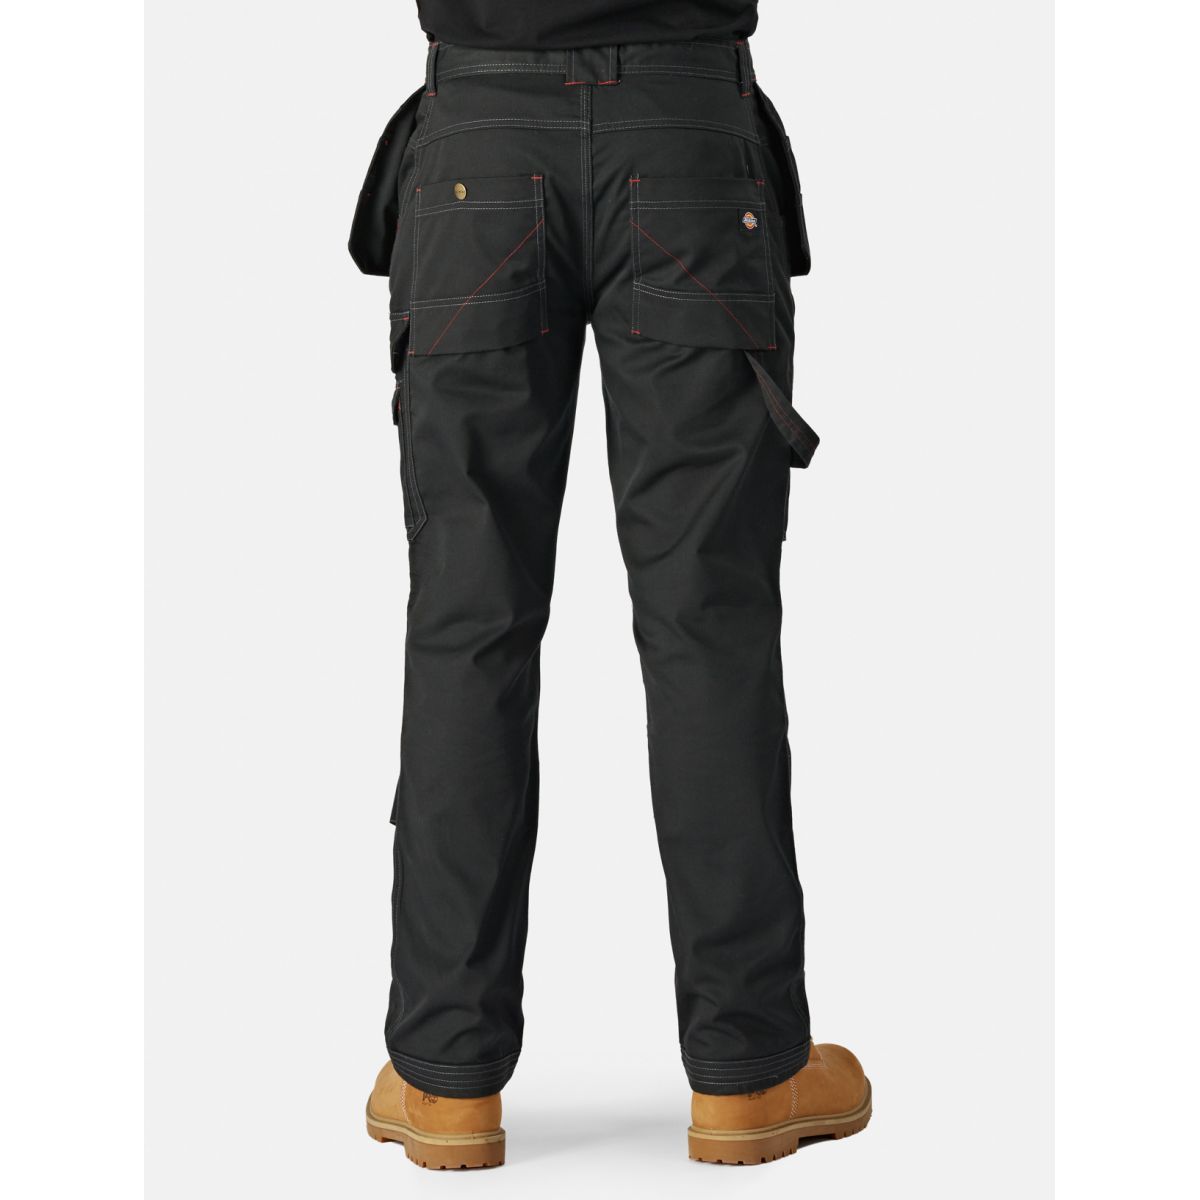 Pantalon Redhawk Pro Noir - Dickies - Taille 36 3